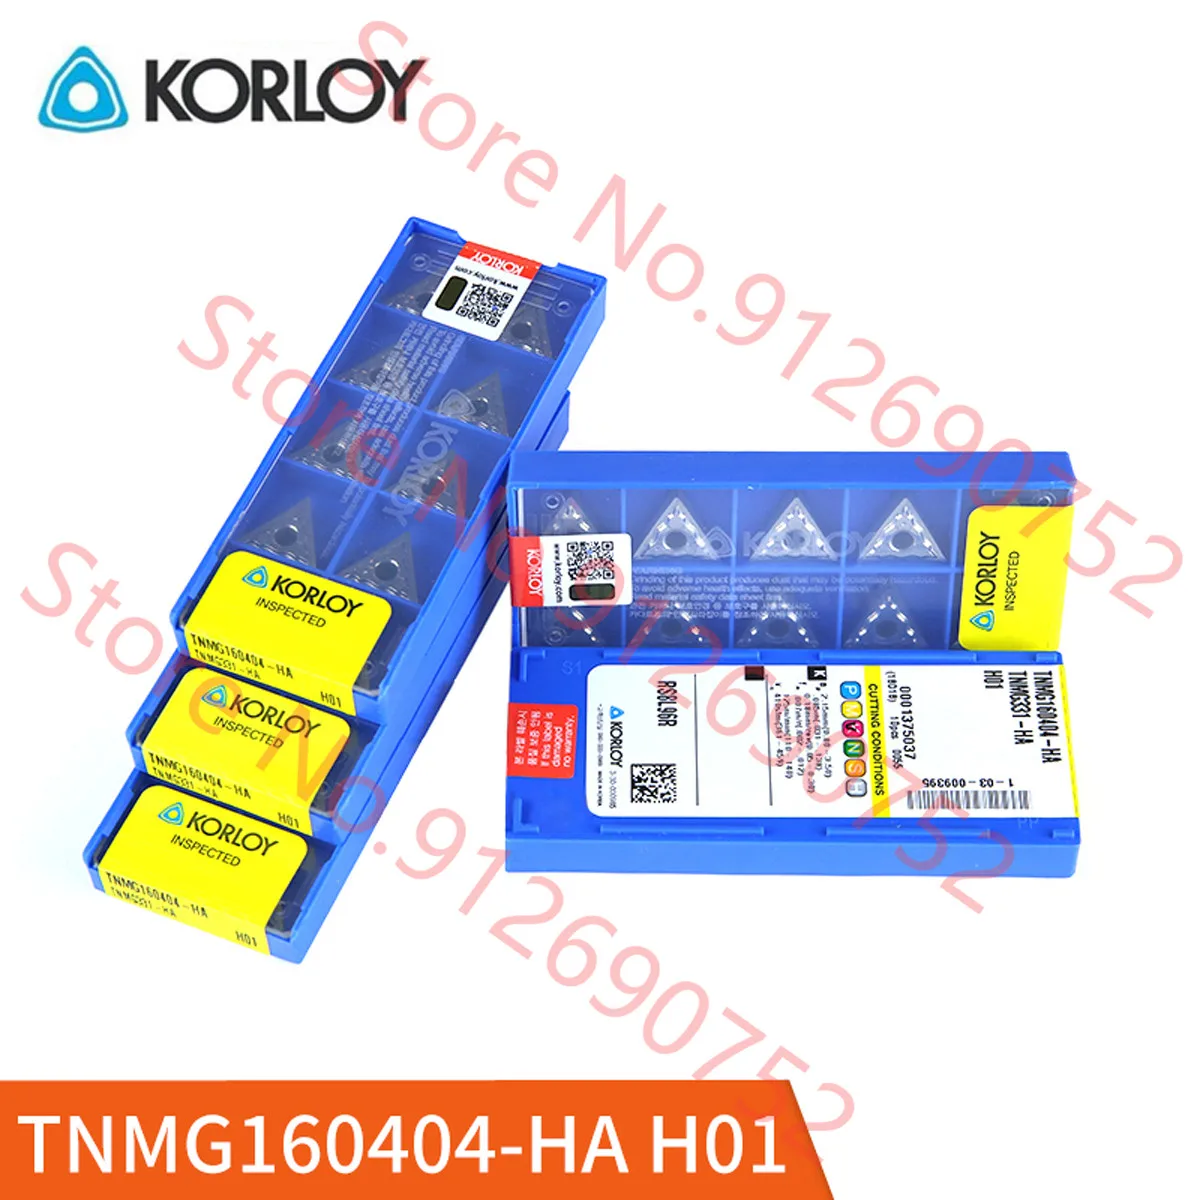 

TNMG160404-HA/TNMG160408-HA H01 NC3120 PC9030 PC5300 Cutting Carbide Insert Inserts